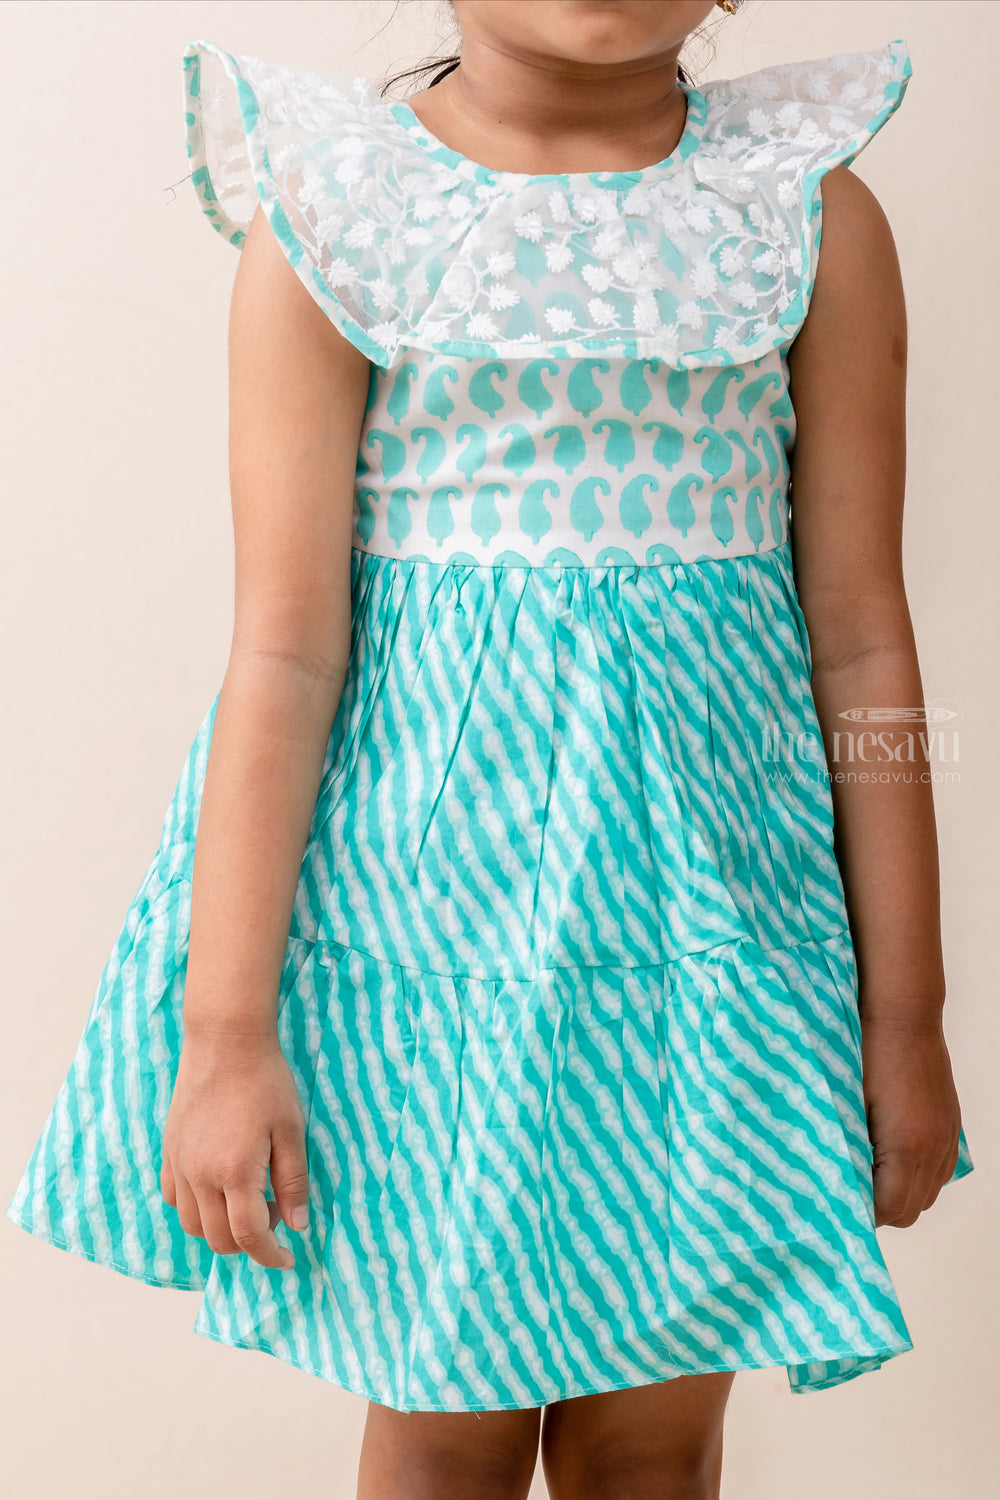 The Nesavu Baby Frock / Jhabla Teal Cotton Gown For Baby Girls With Designer Neck Patterns psr silks Nesavu